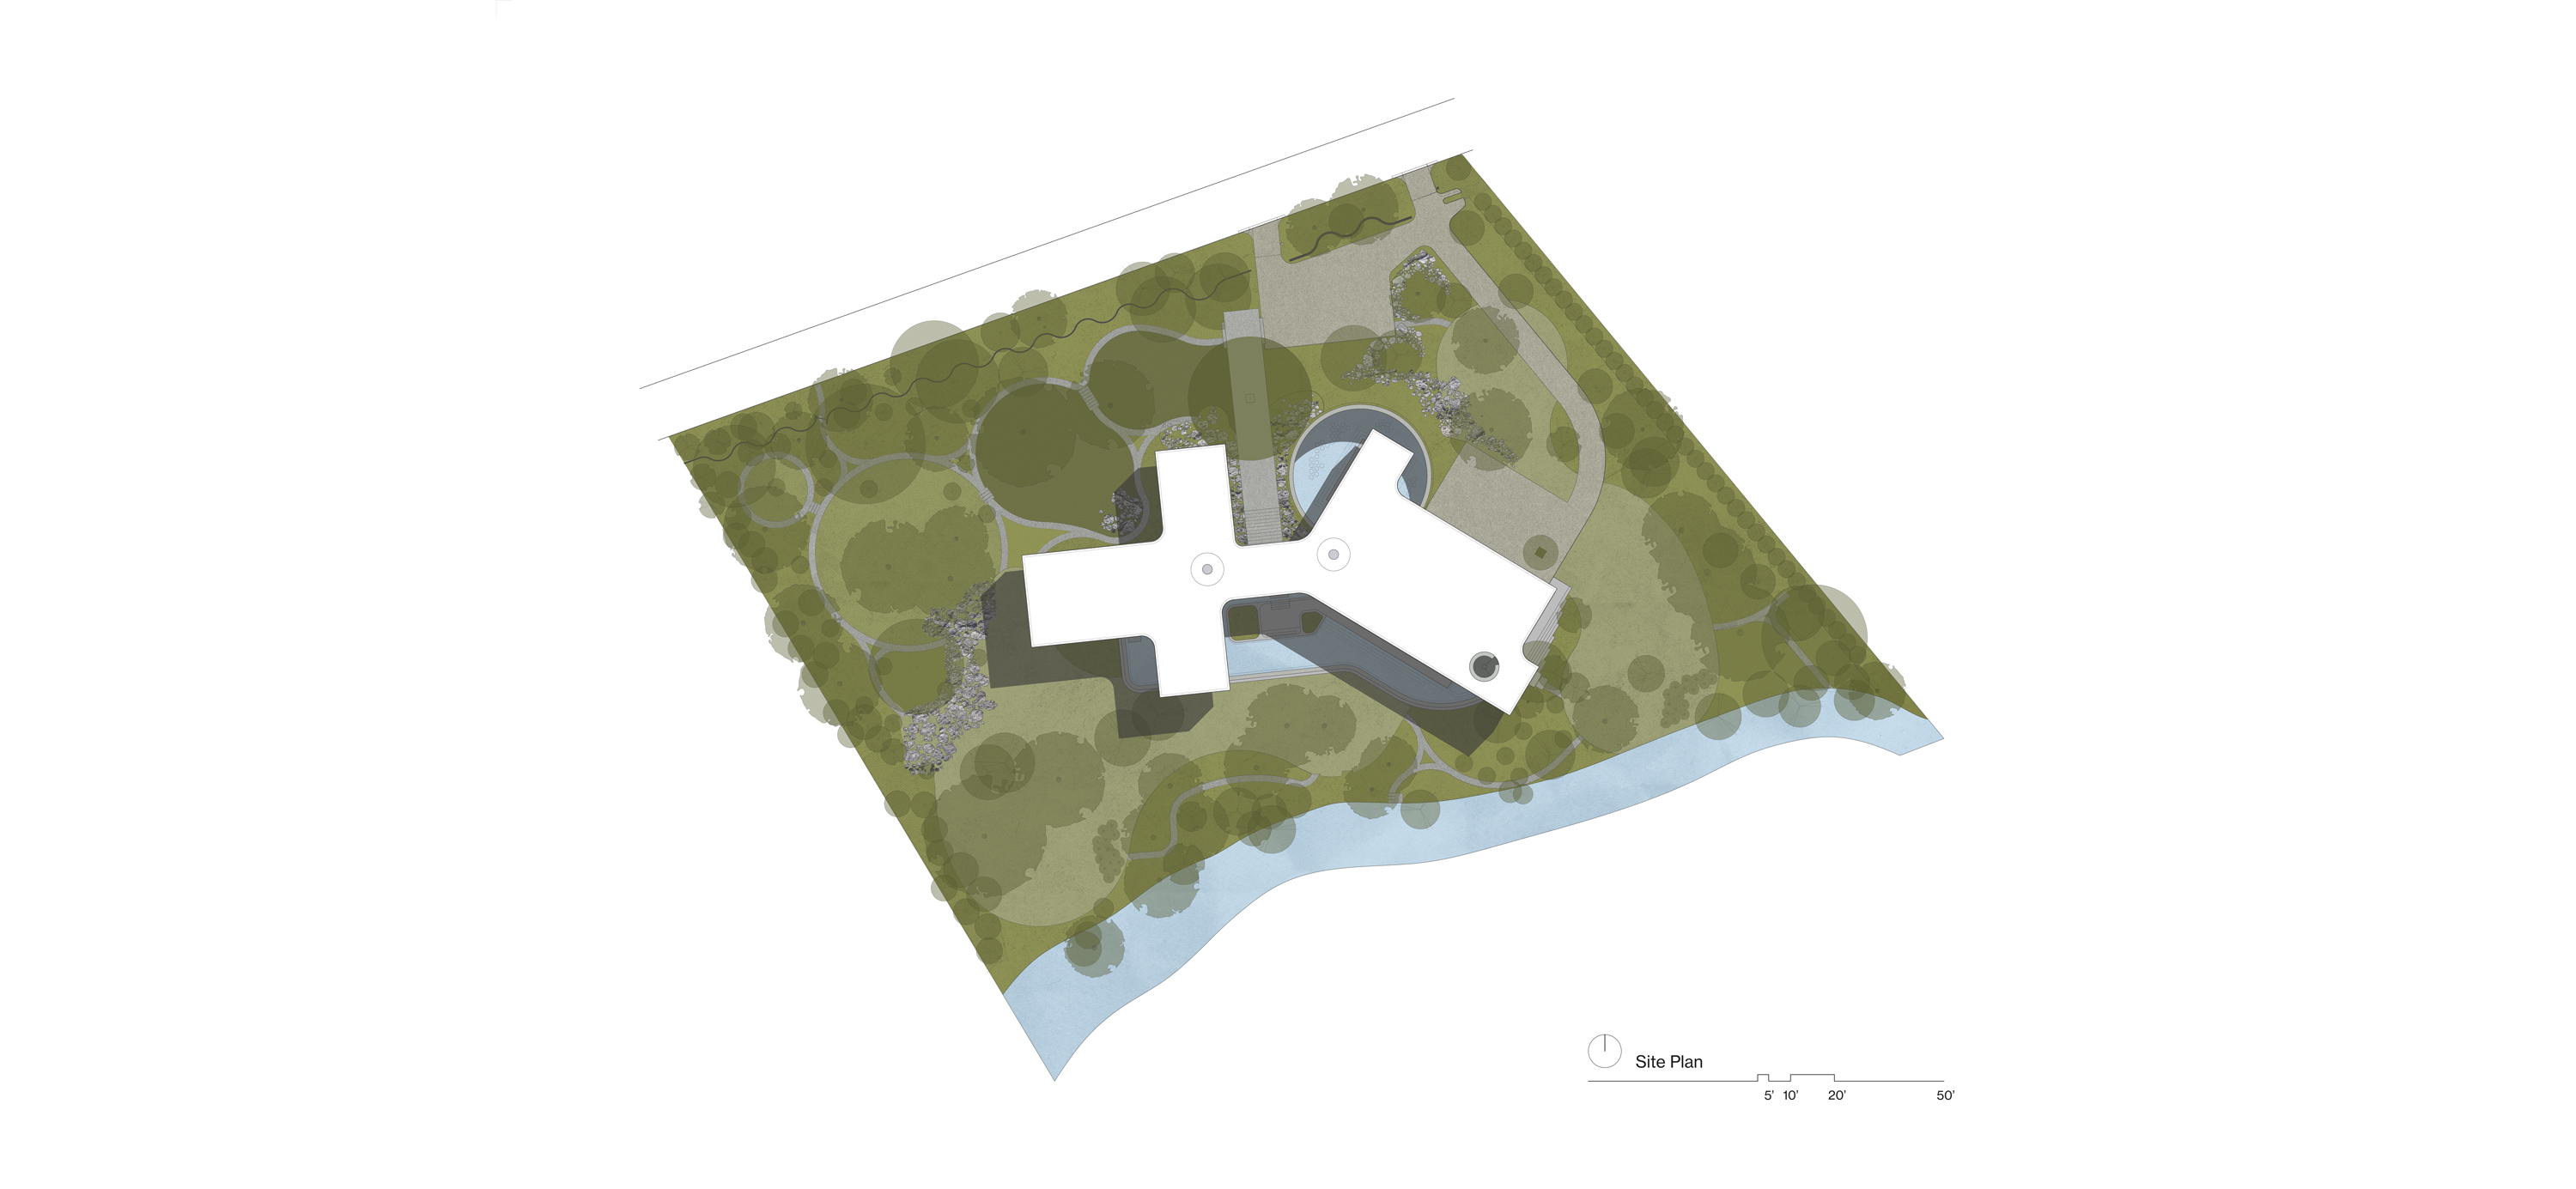 Site Plan rendering of Ammamma Legacy Residence by Specht Novak Architects.